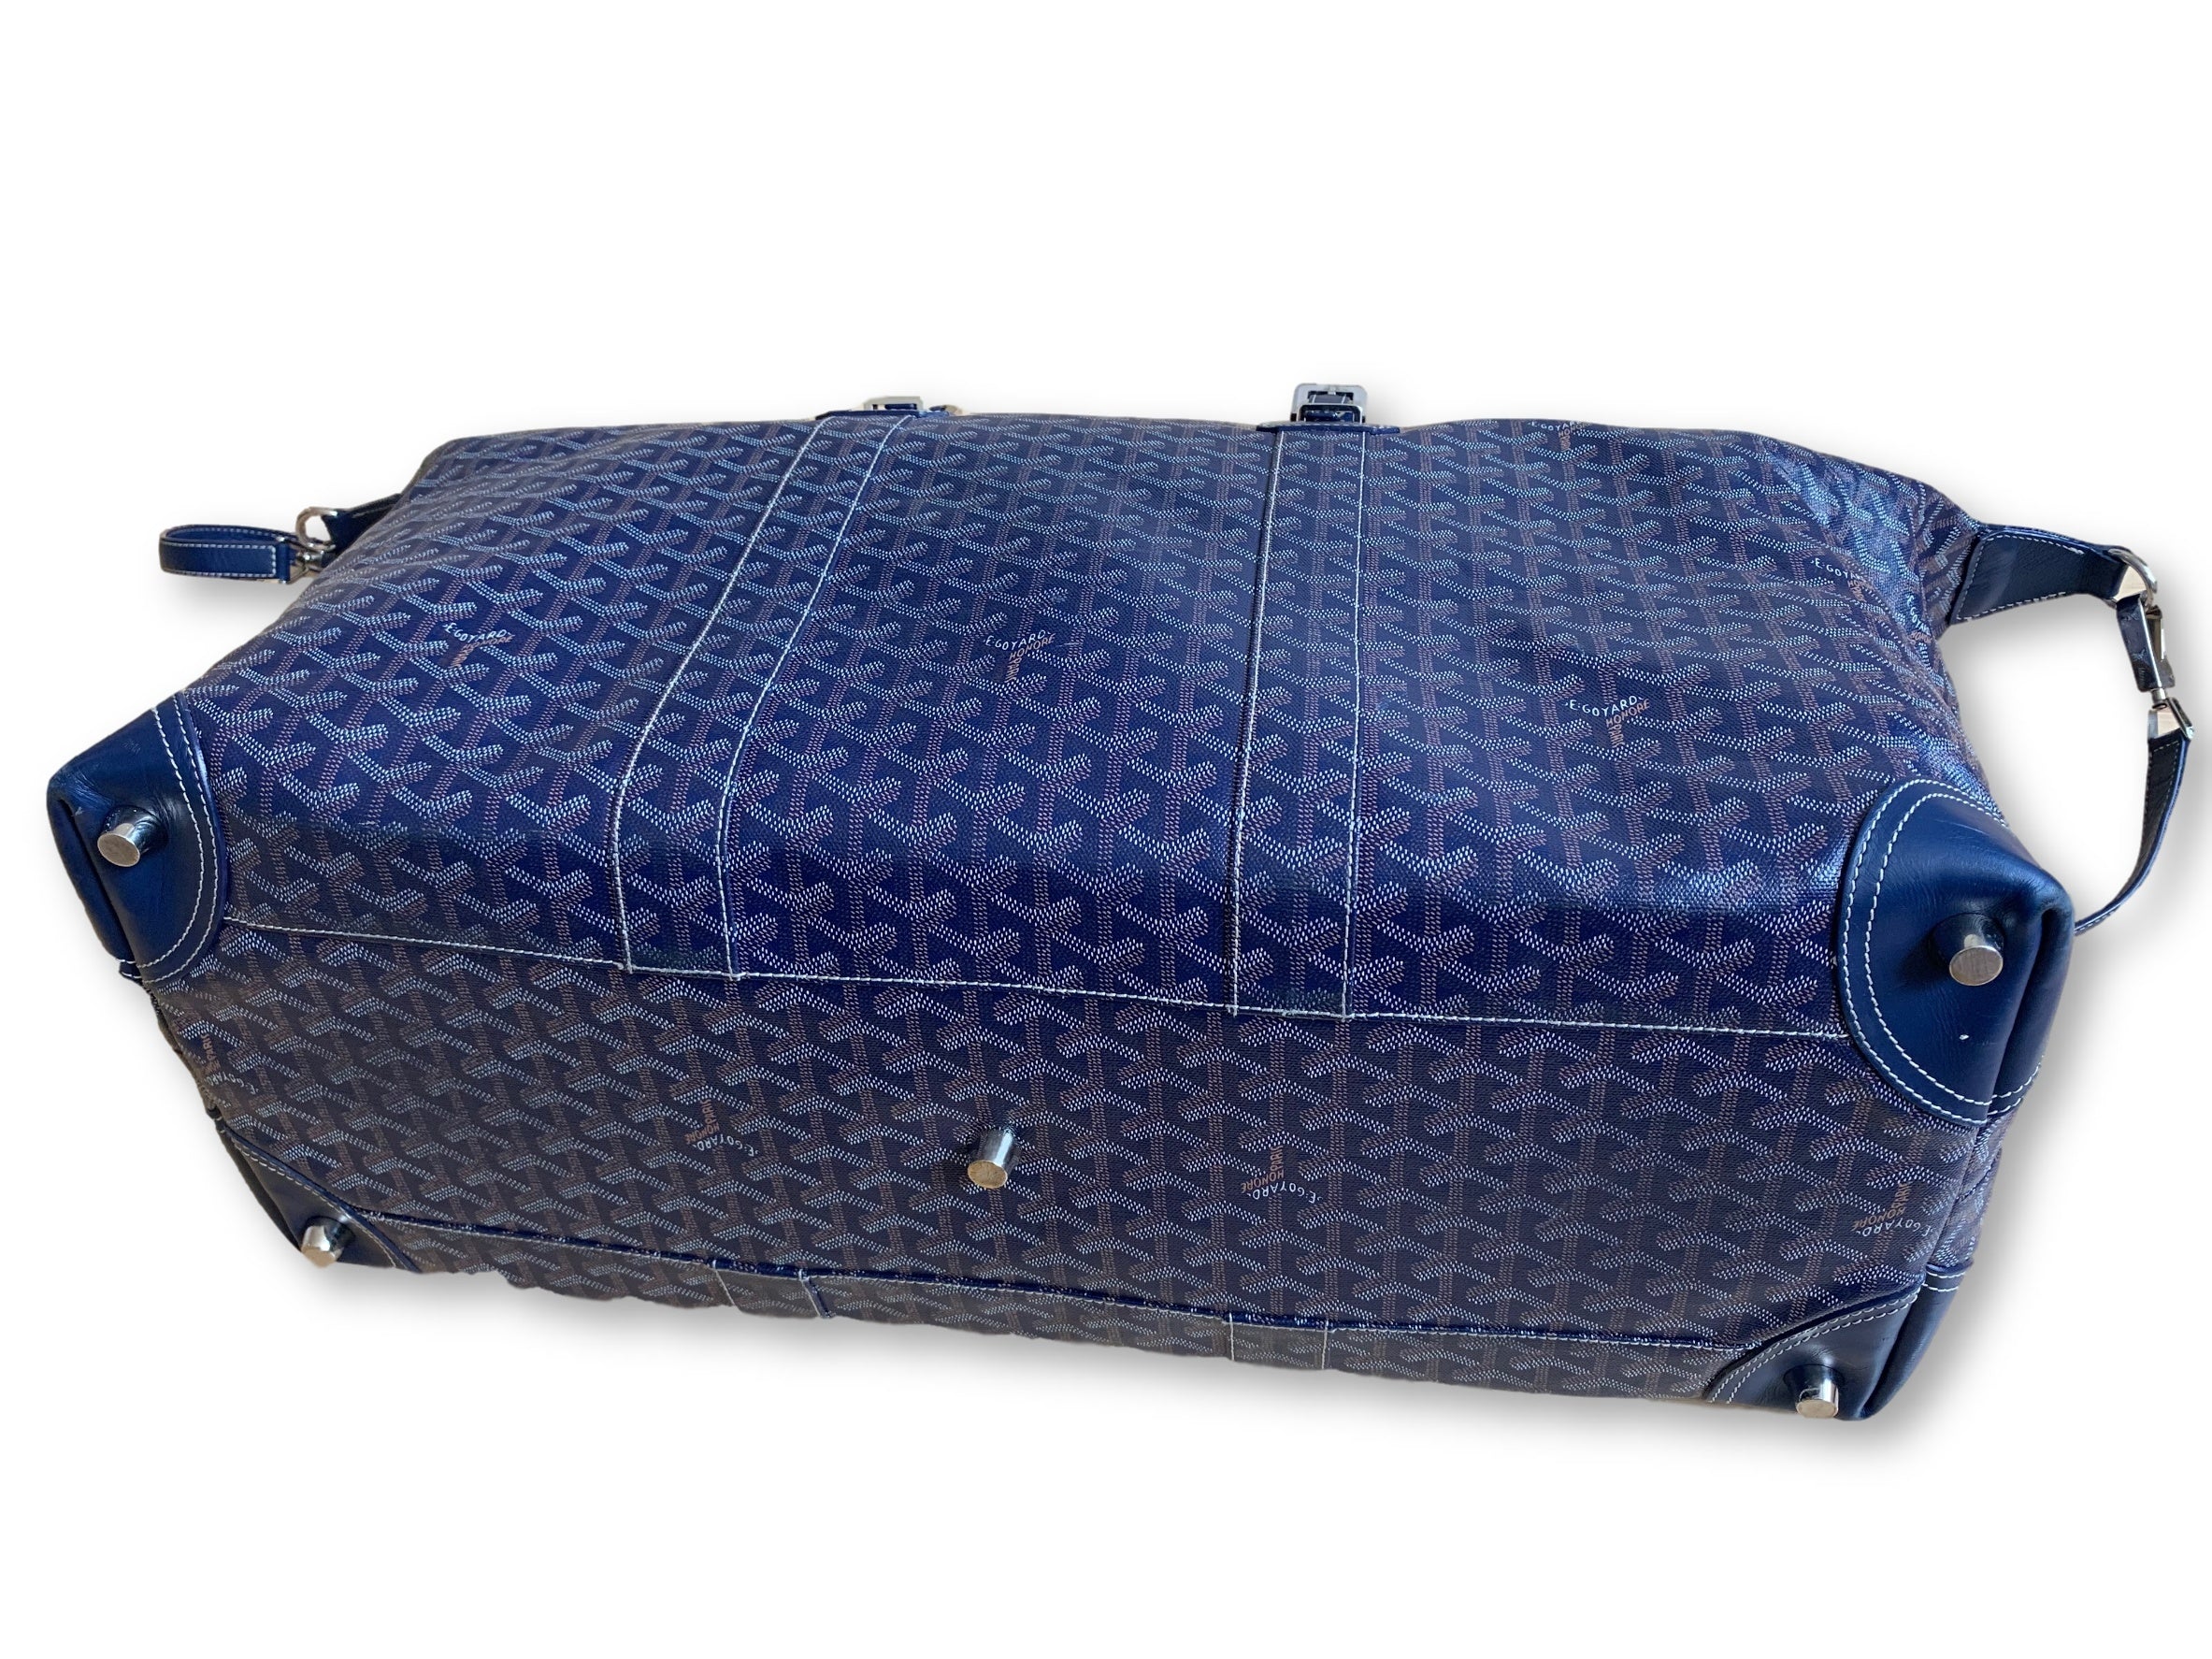 Navy Blue Croisiere 50 Duffle Travel Bag